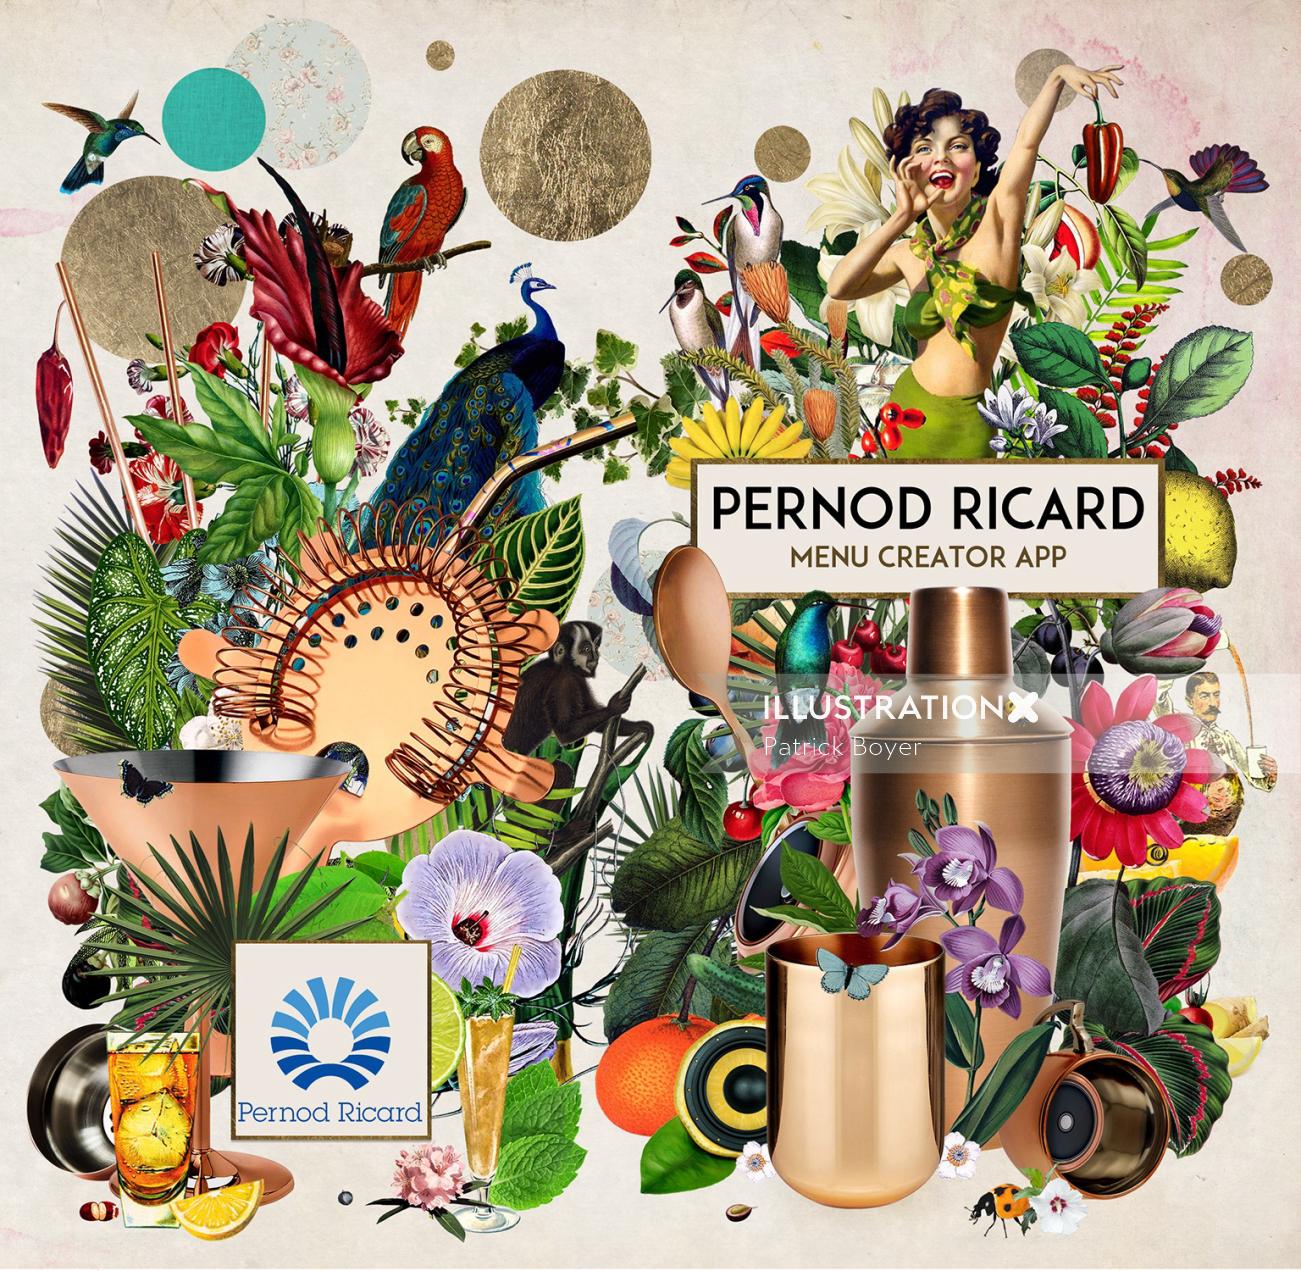 Graphique publicitaire Pernod Ricard